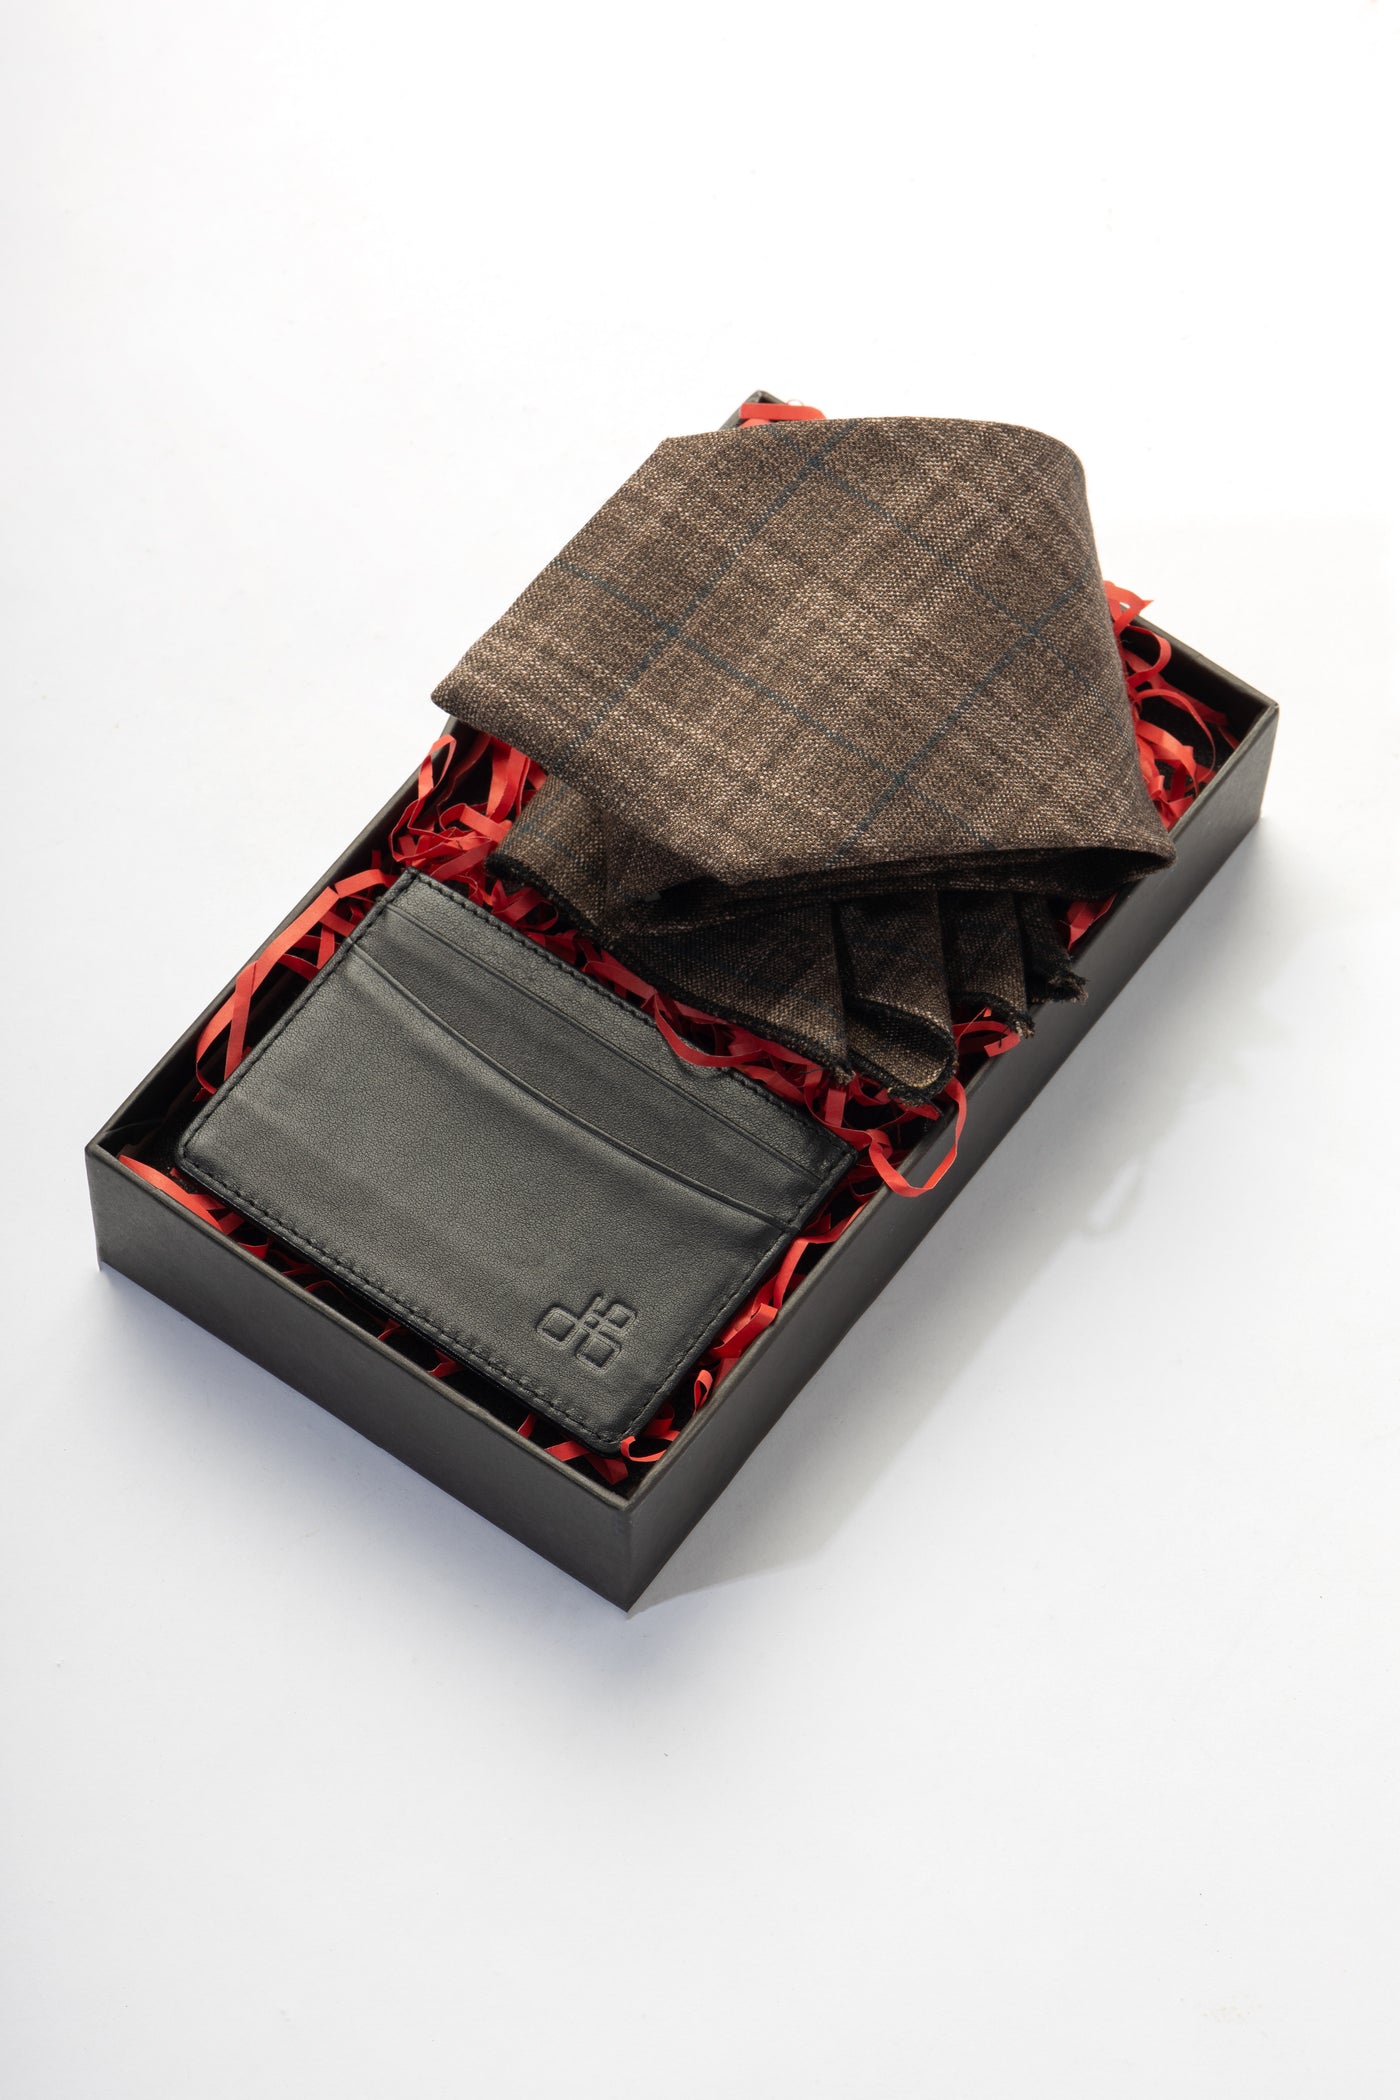 Valentine DE backer's Gift Box